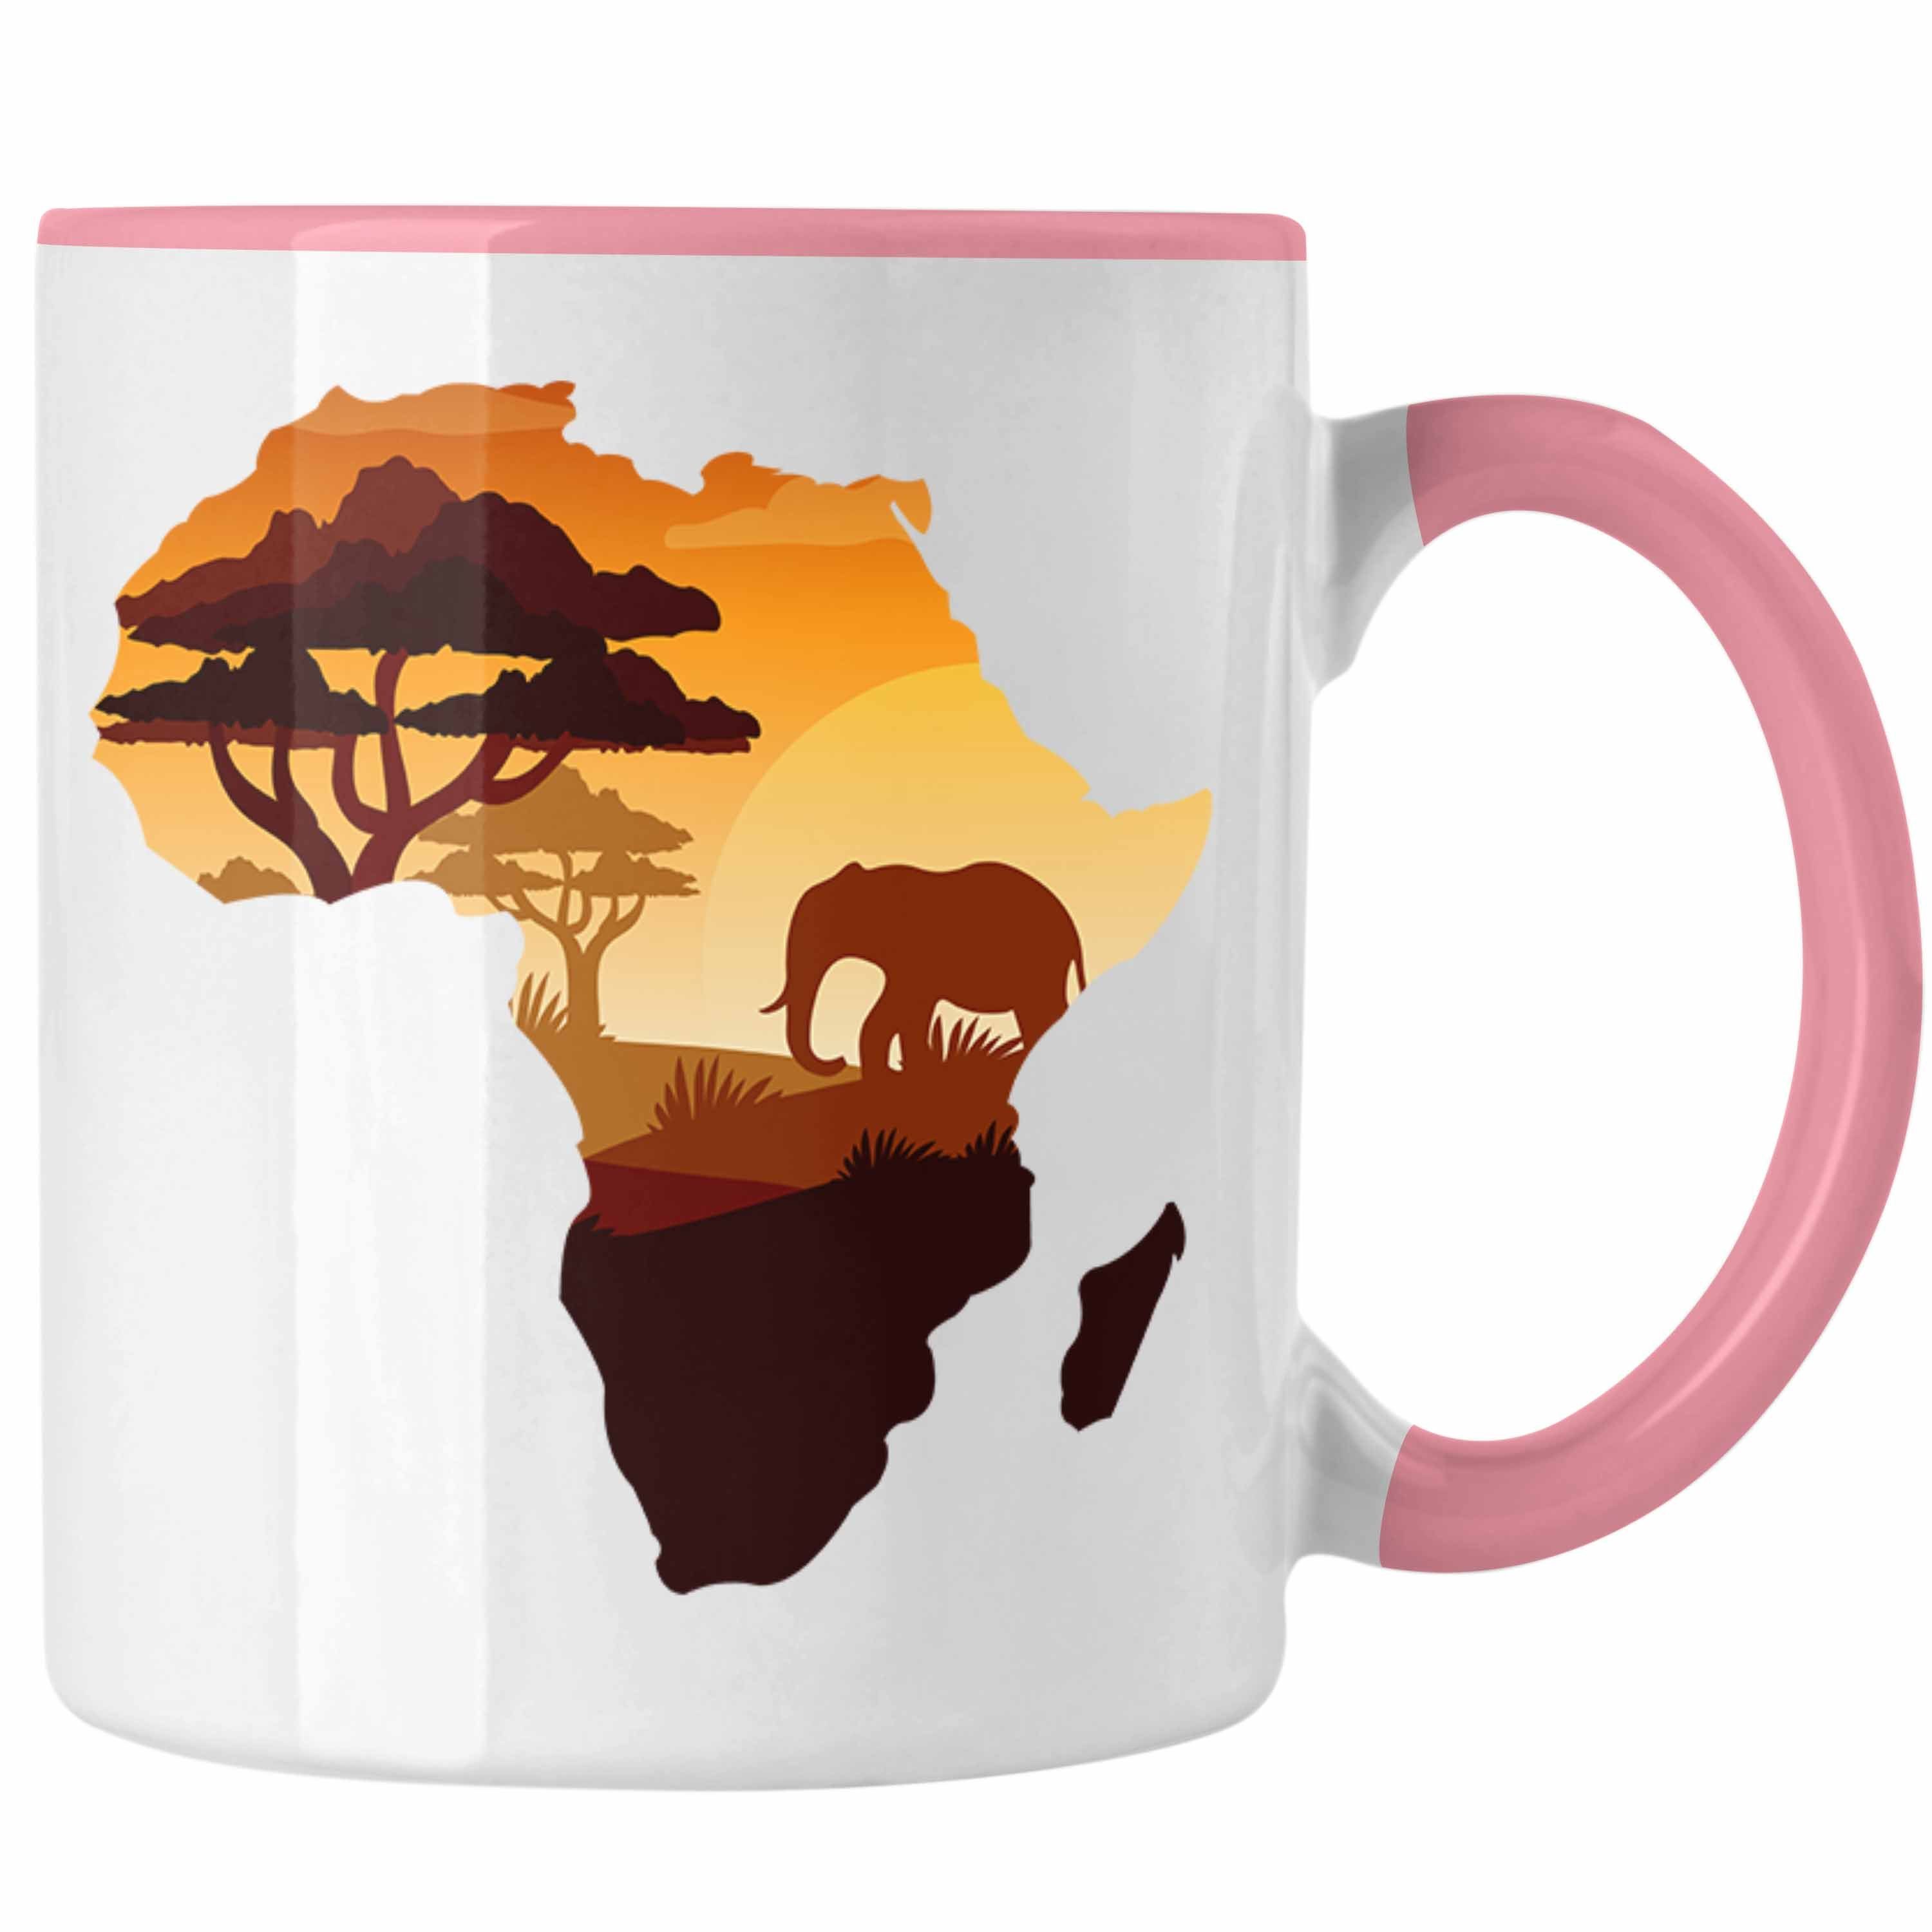 Trendation Tasse Tasse Afrika Safari Tierliebhaber Abenteurer Afrika Map Geschenkidee Rosa